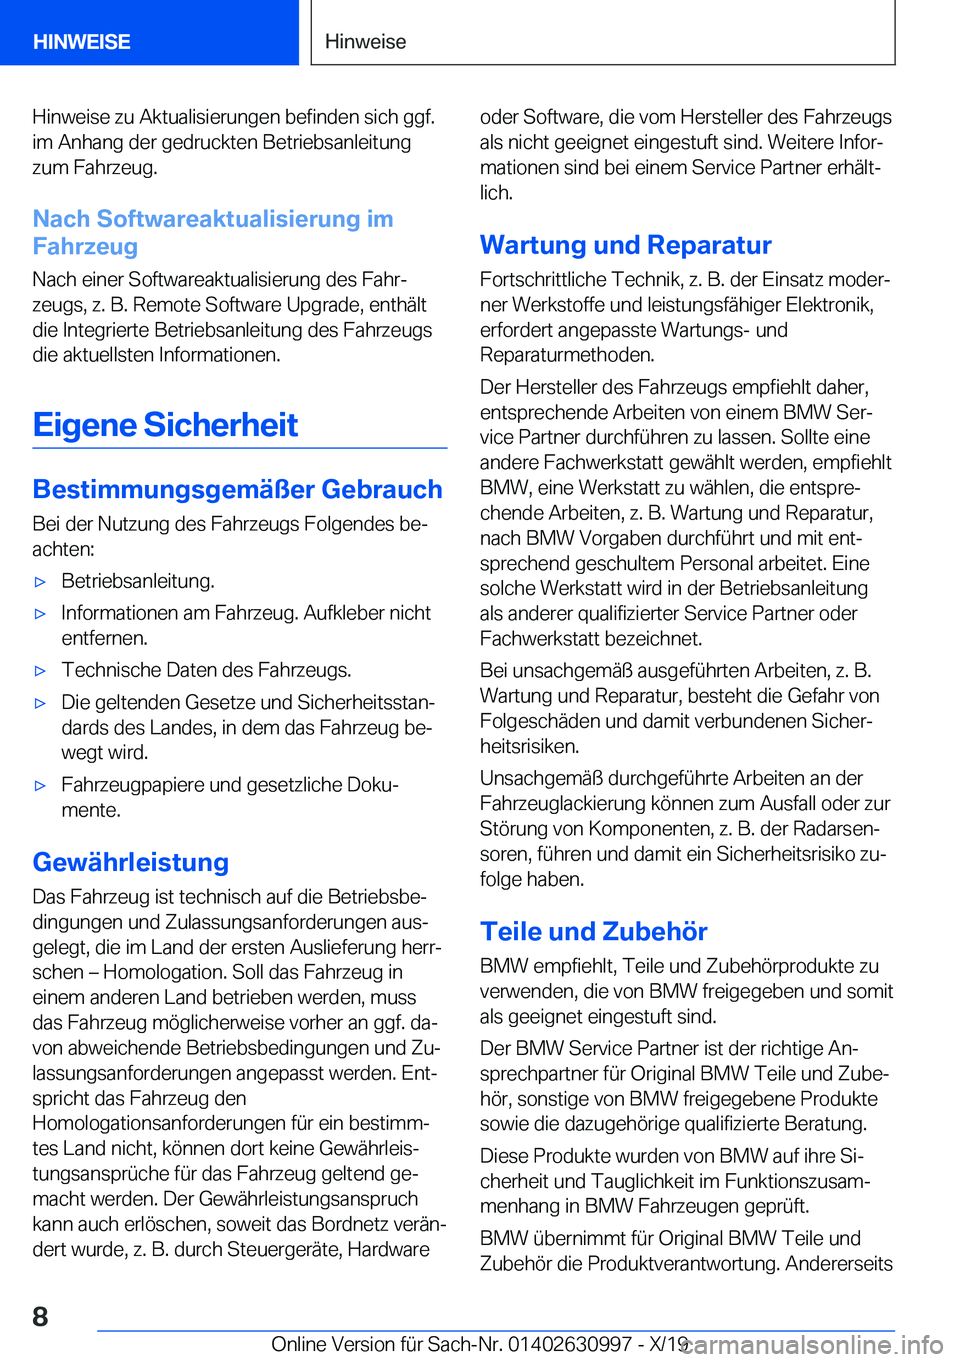 BMW 2 SERIES GRAN COUPE 2020  Betriebsanleitungen (in German) �H�i�n�w�e�i�s�e��z�u��A�k�t�u�a�l�i�s�i�e�r�u�n�g�e�n��b�e�f�i�n�d�e�n��s�i�c�h��g�g�f�.�i�m��A�n�h�a�n�g��d�e�r��g�e�d�r�u�c�k�t�e�n��B�e�t�r�i�e�b�s�a�n�l�e�i�t�u�n�g�z�u�m��F�a�h�r�z�e�u